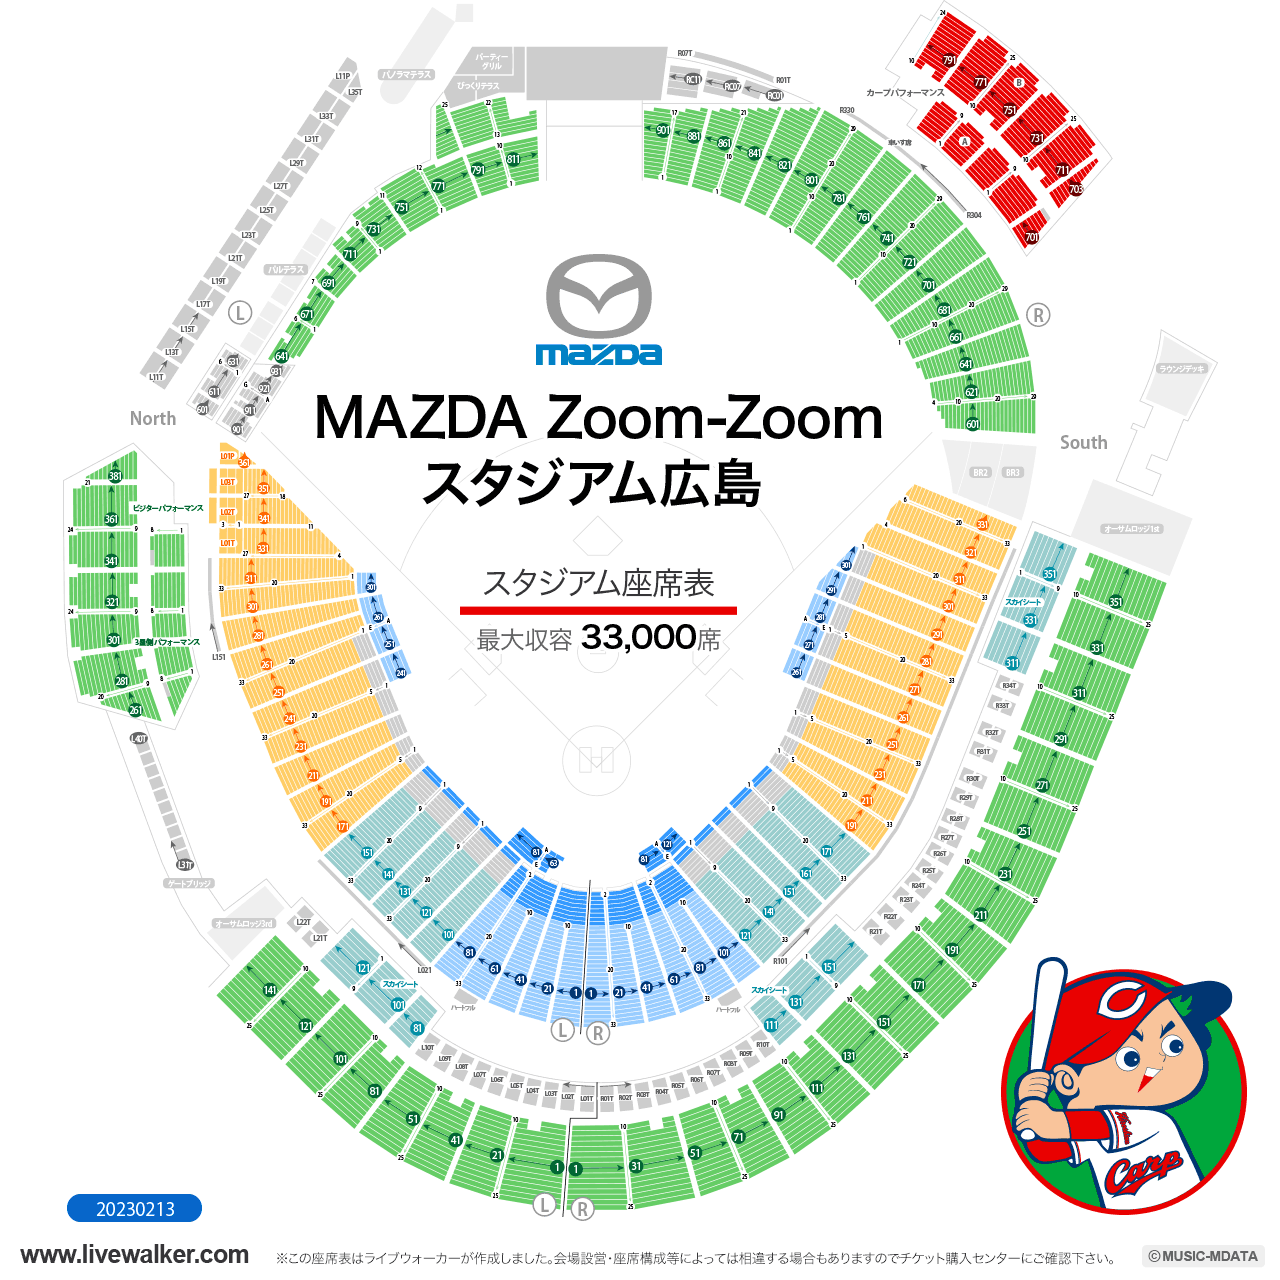 Mazda Zoom-Zoom スタジアム広島（マツダスタジアム）マツダスタジアムの座席表